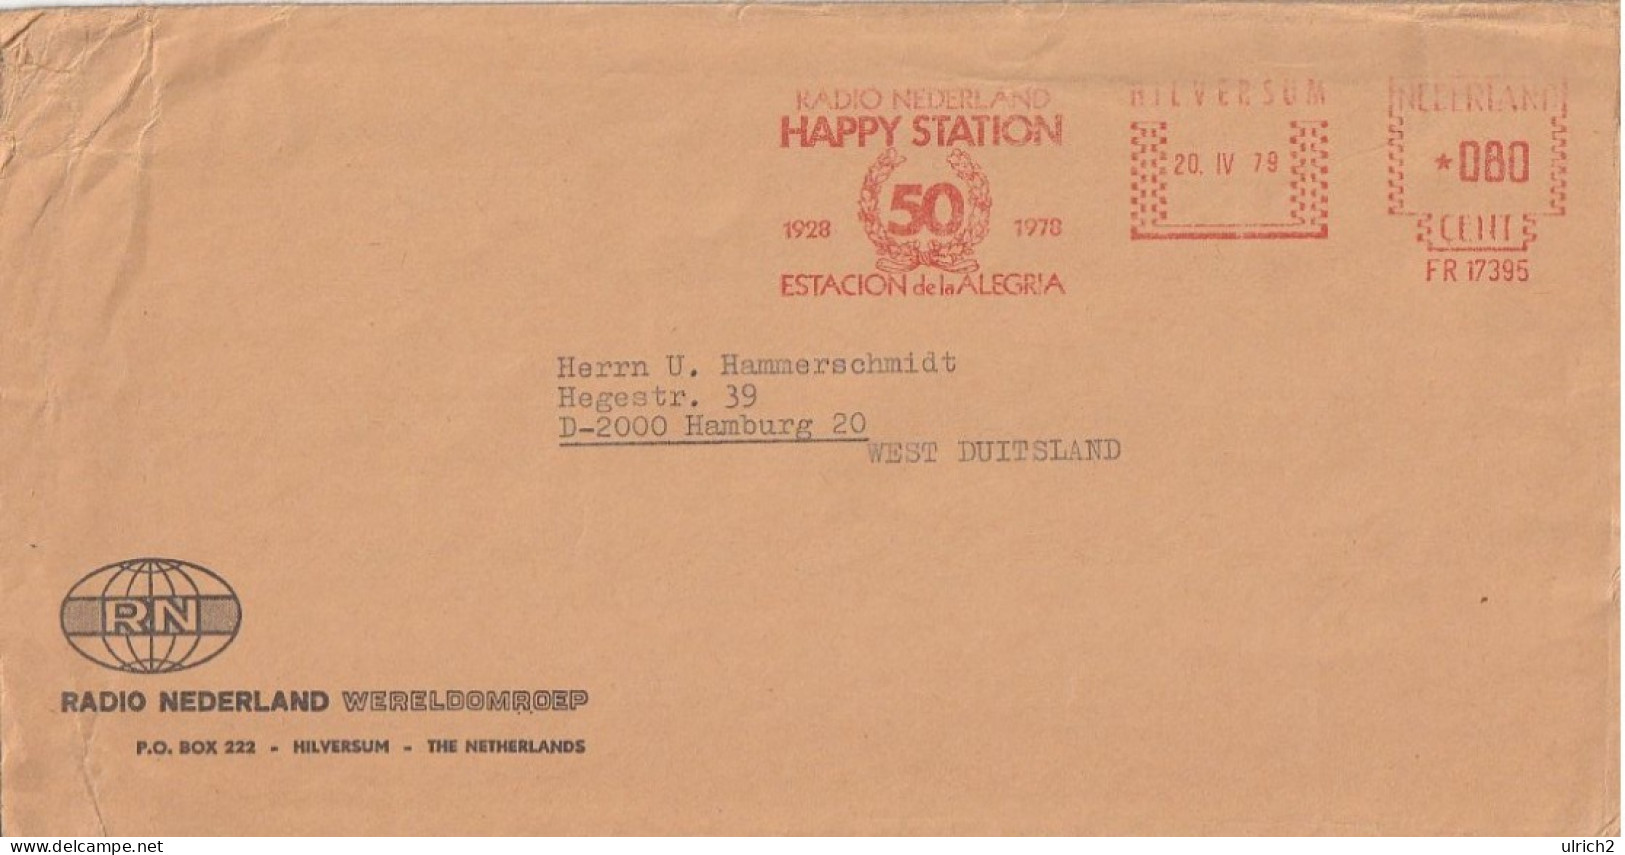 Netherlands - Radio Nederland Happy Station 50 Years - 1979 (67147) - Storia Postale